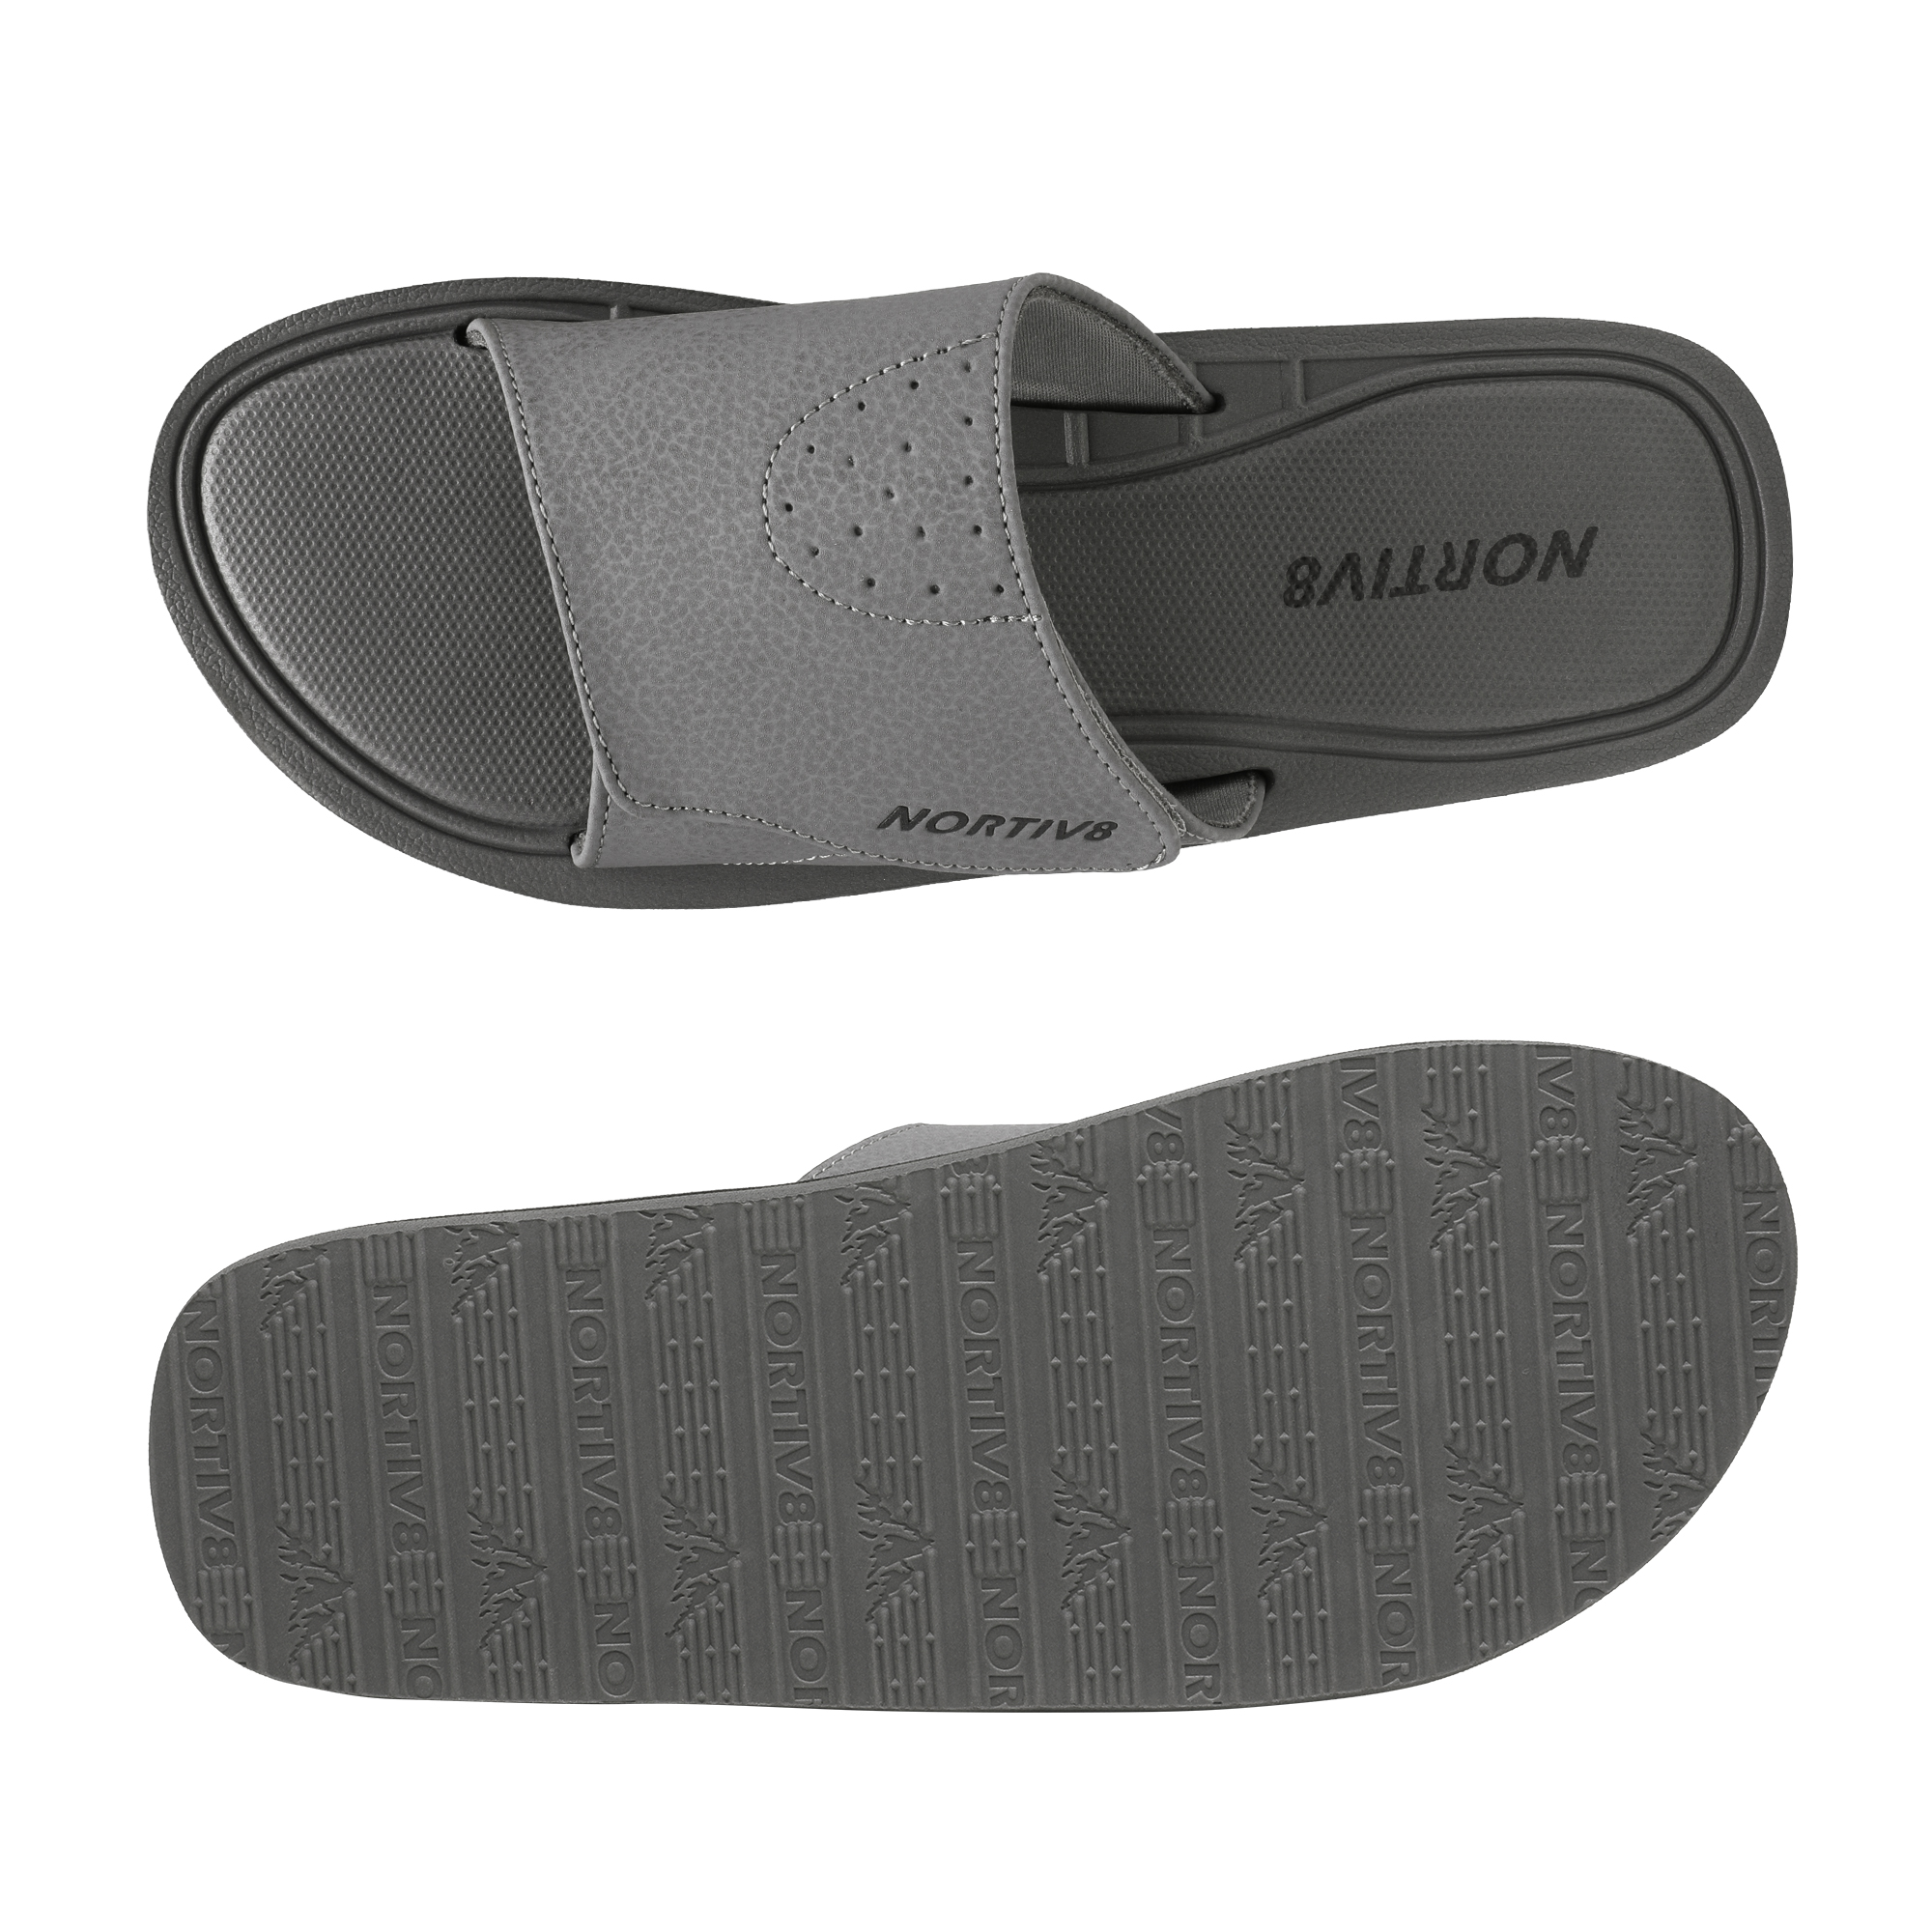 Nortiv8 Men's Memory Foam Adjustable Slide Sandals Comfort Lightweight Summer Beach Sandals Shoes FUSION GREY Size 15 - image 3 of 5